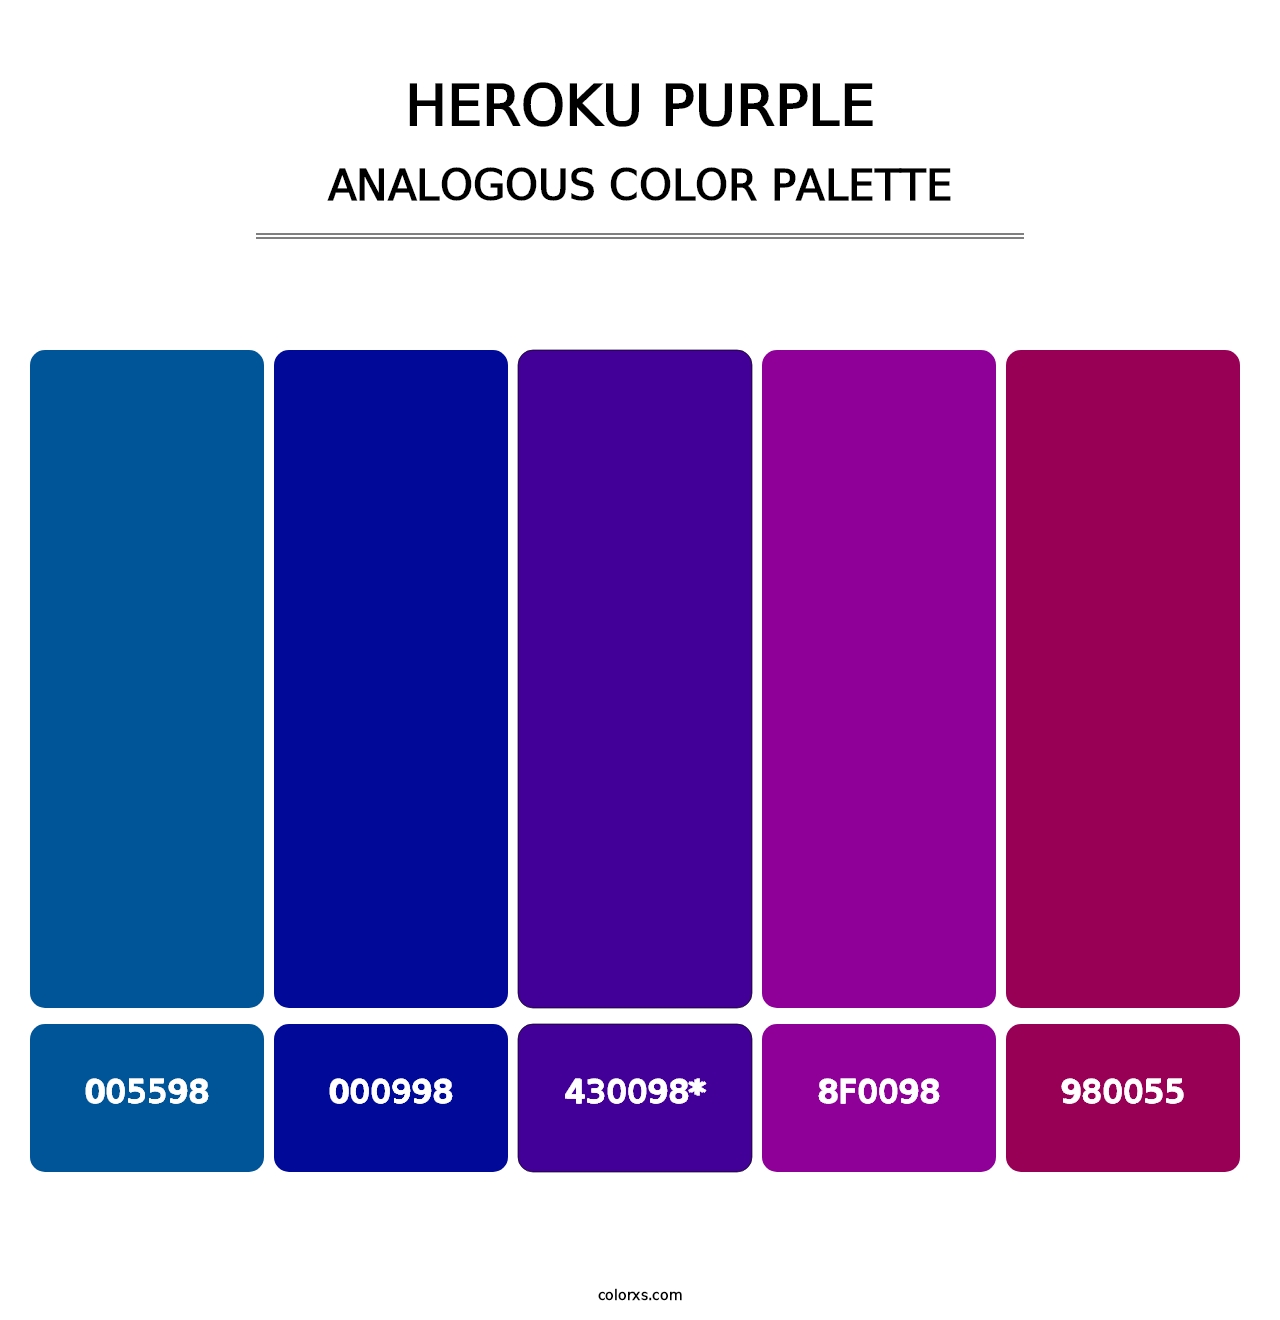 Heroku Purple - Analogous Color Palette